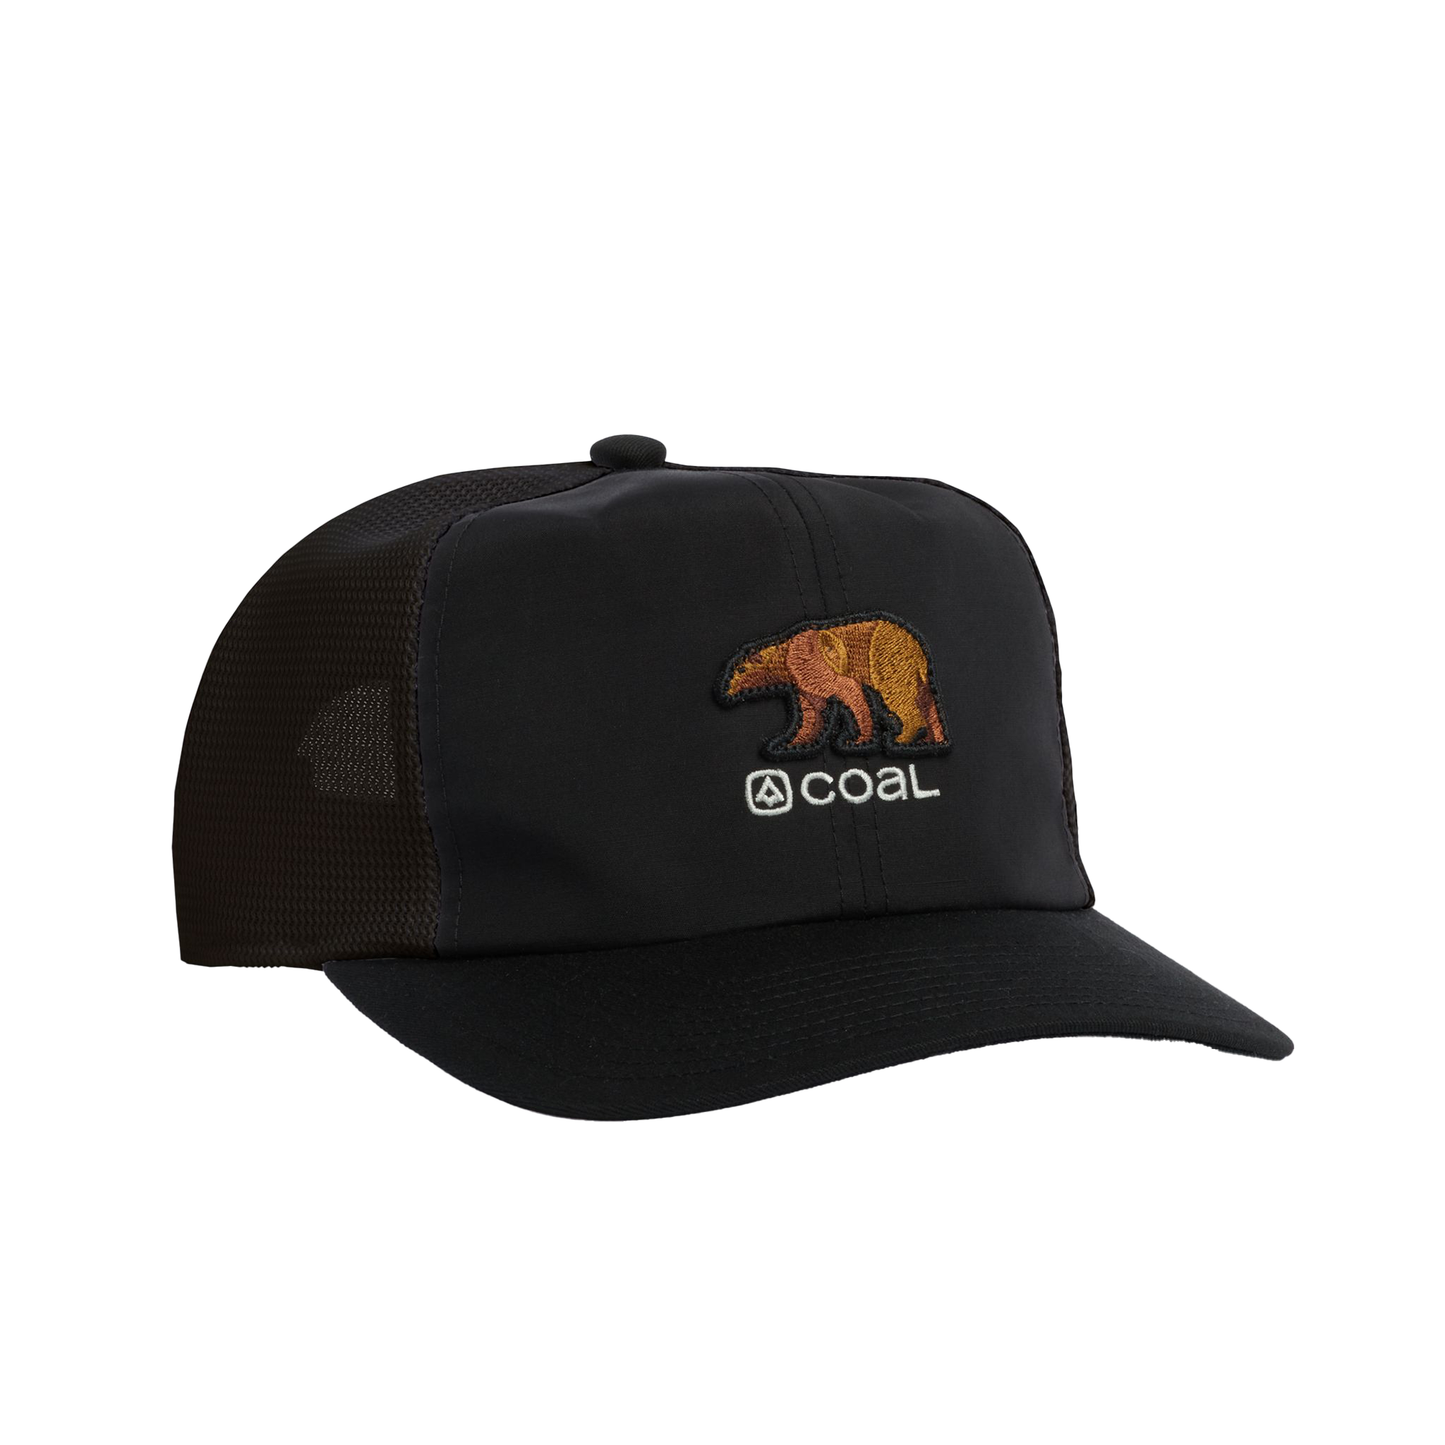 Coal Zephyr Trucker Hat Black OS Hats